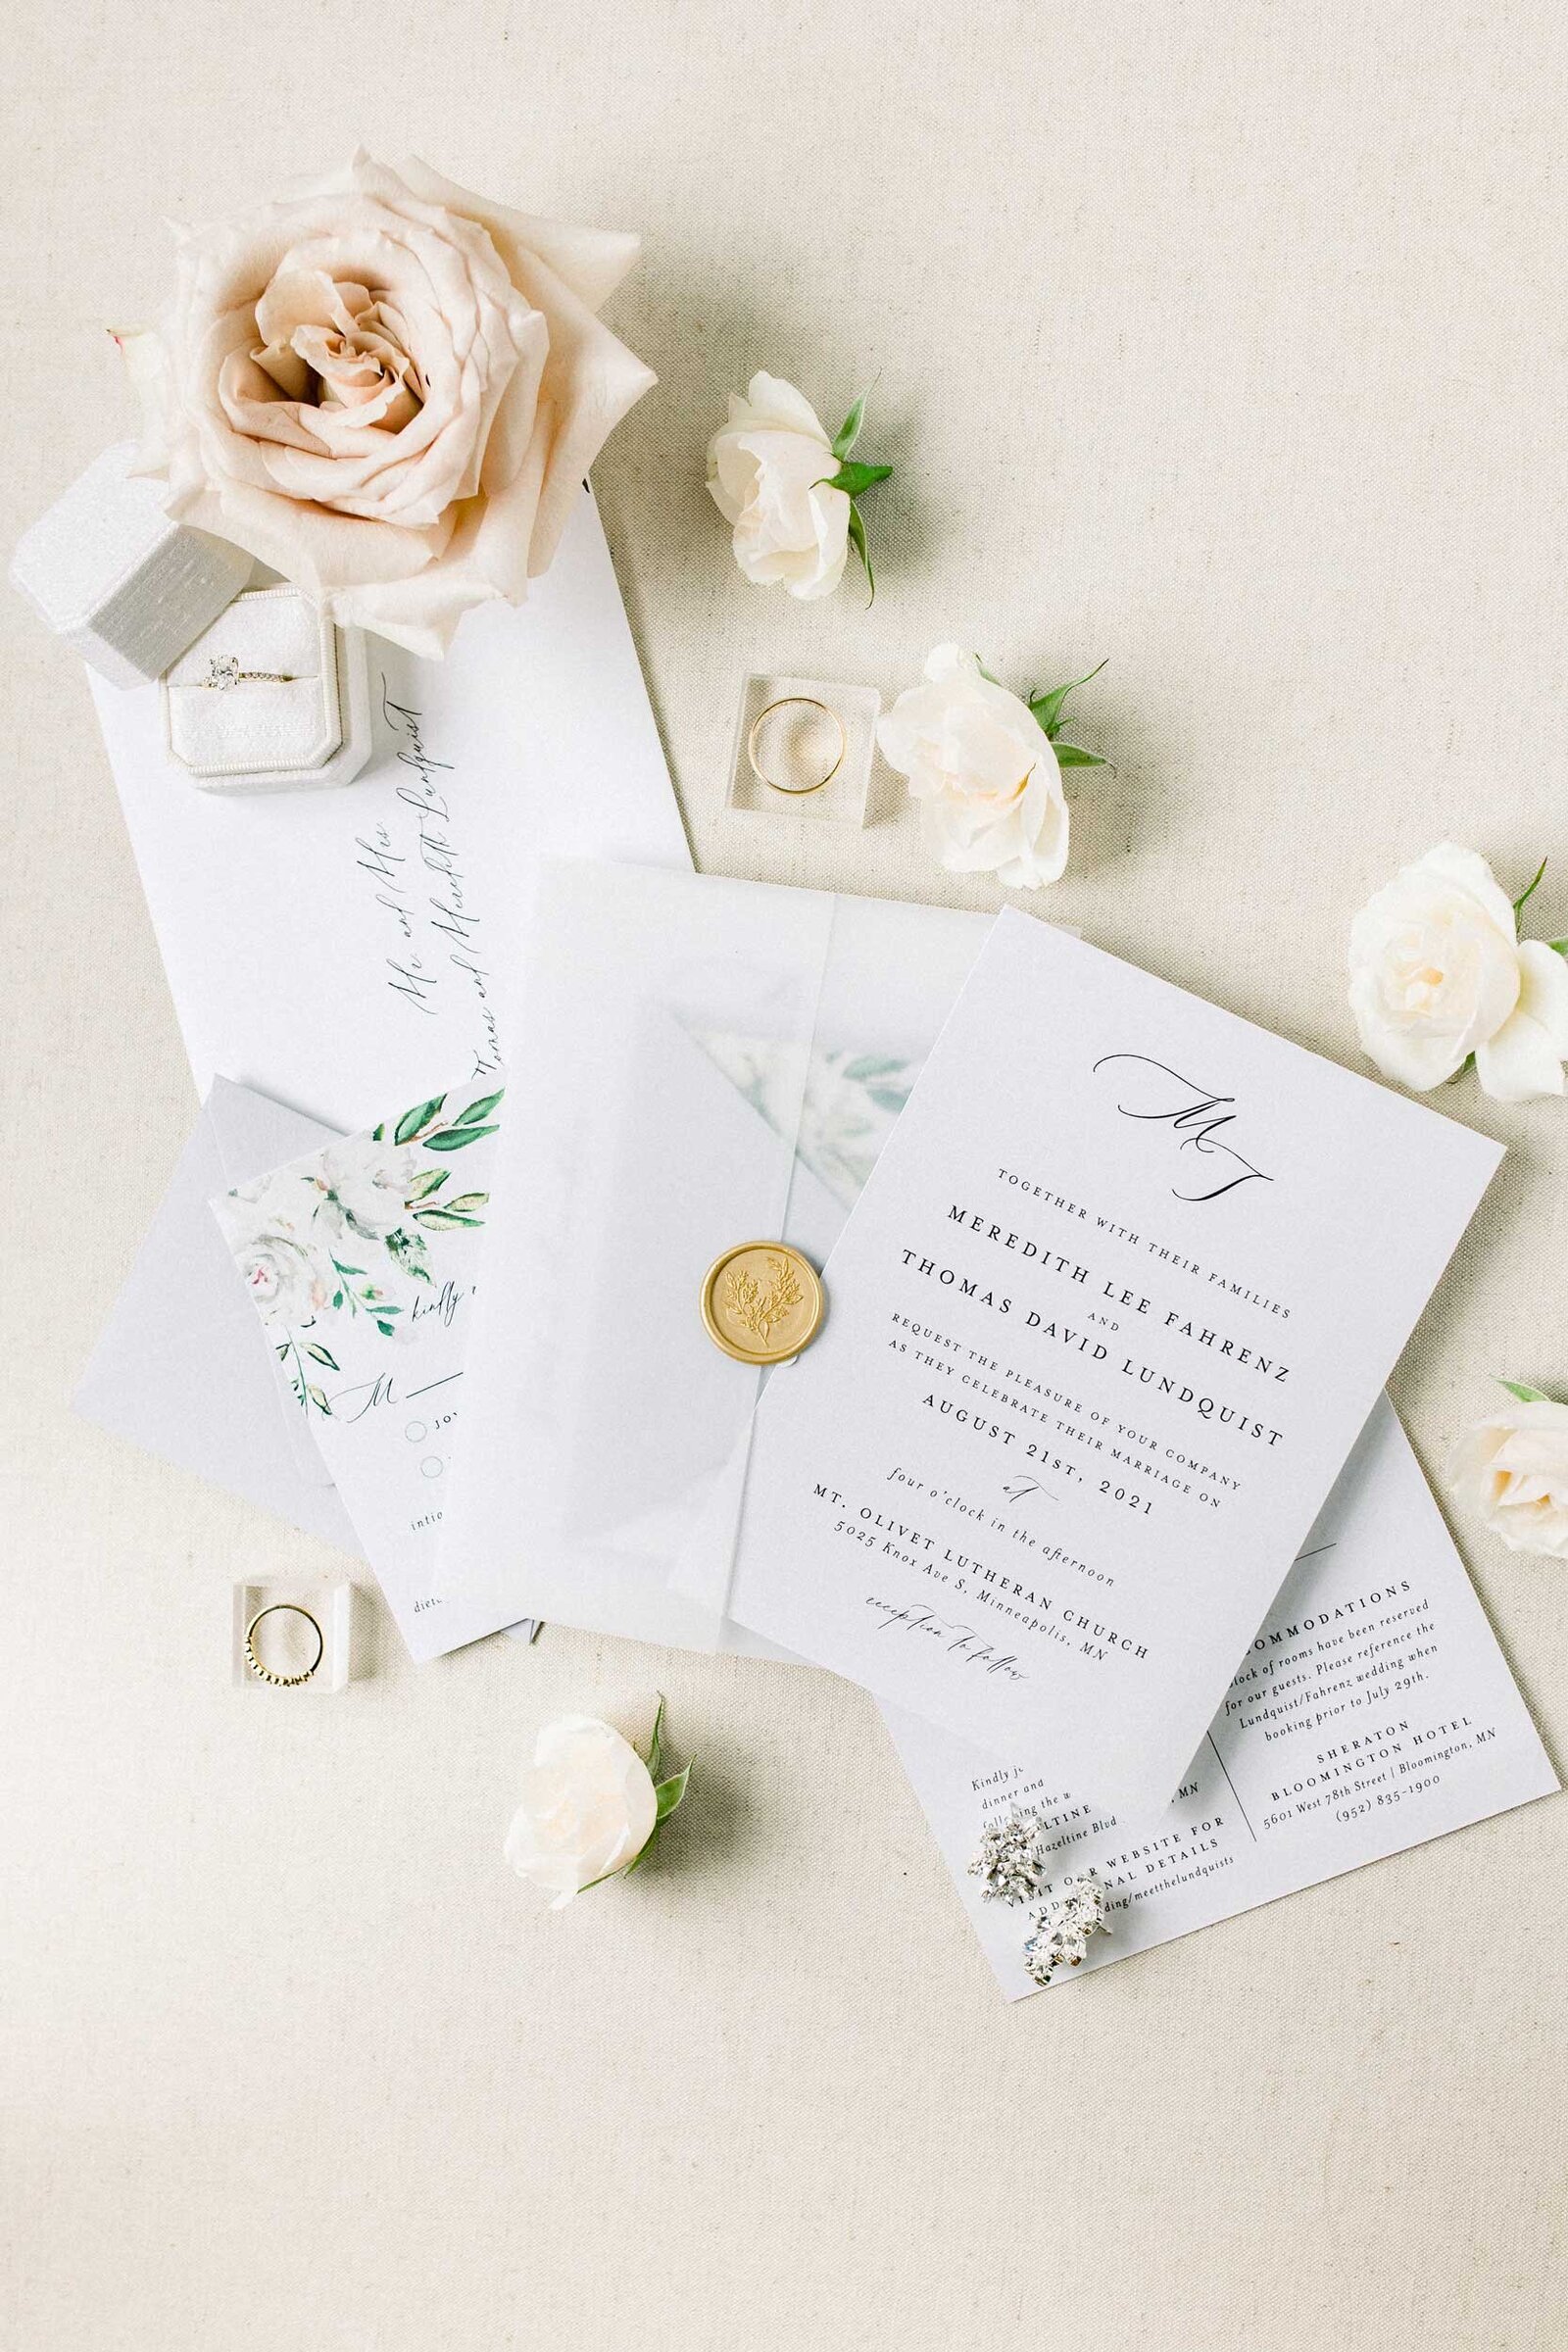 northern-vine-design-wedding-invitation-suite-with-wax-seal